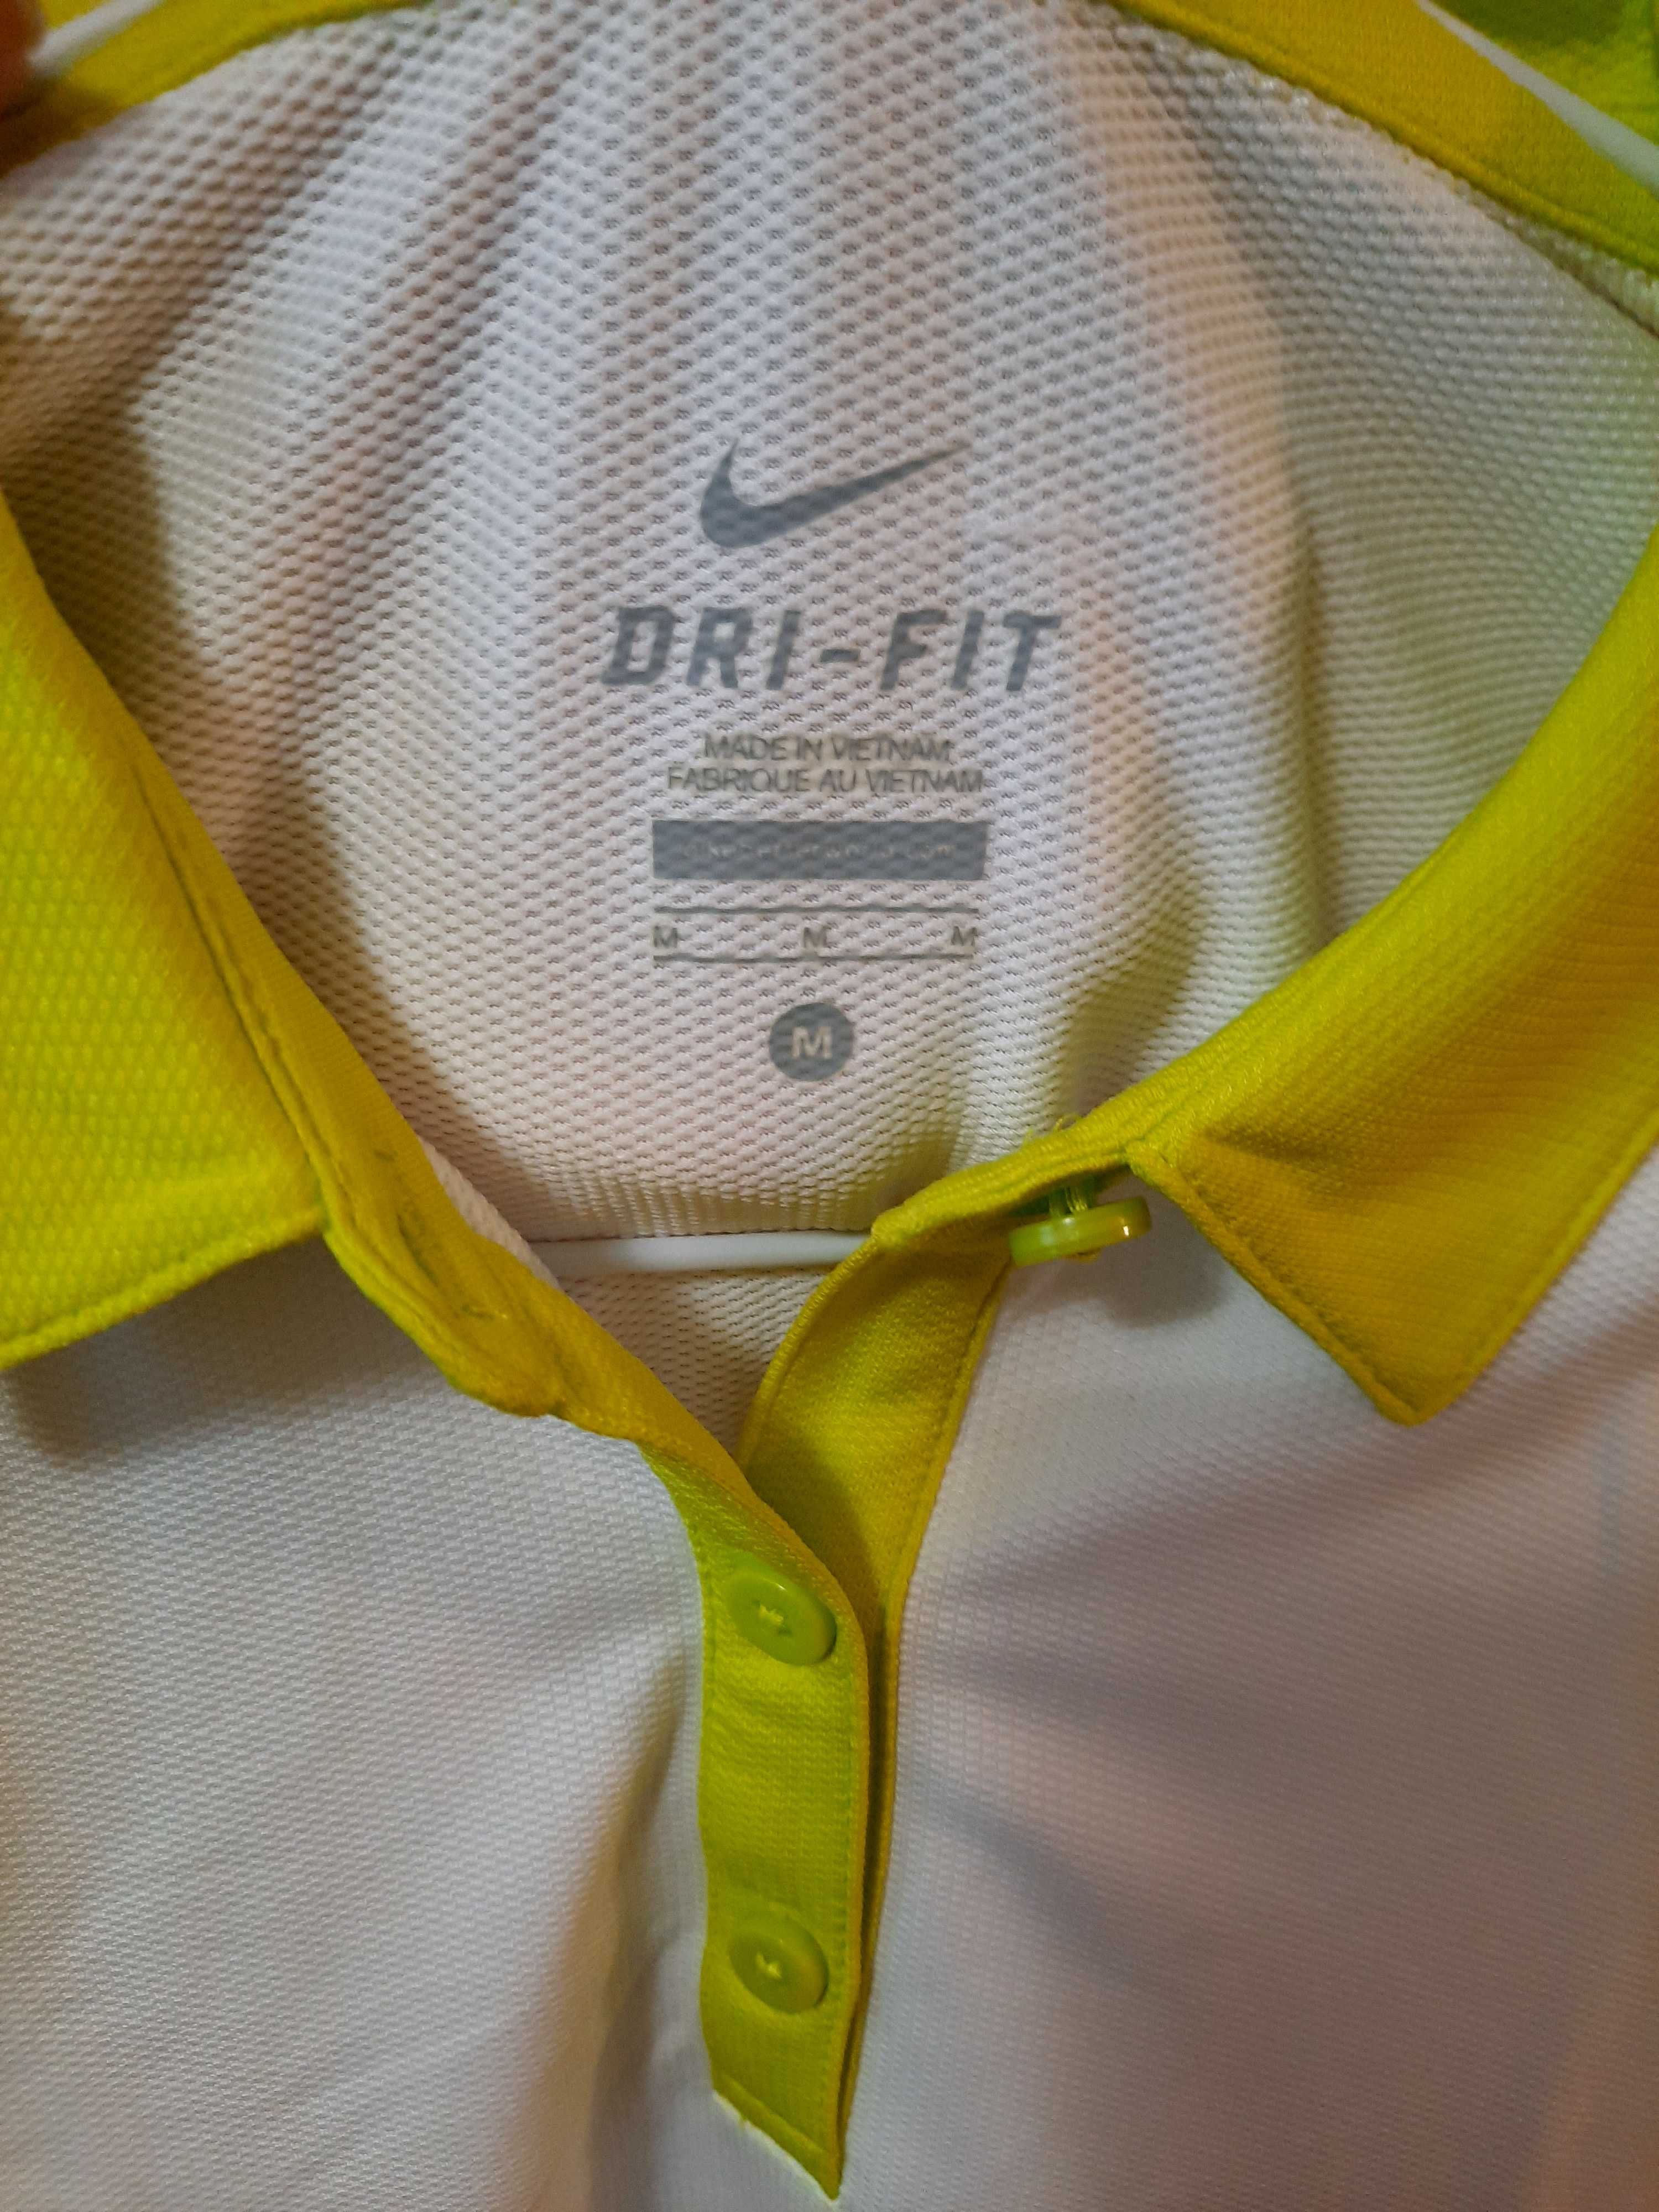 Футболка поло Nike Dri Fit размер 46 48 M сост новой